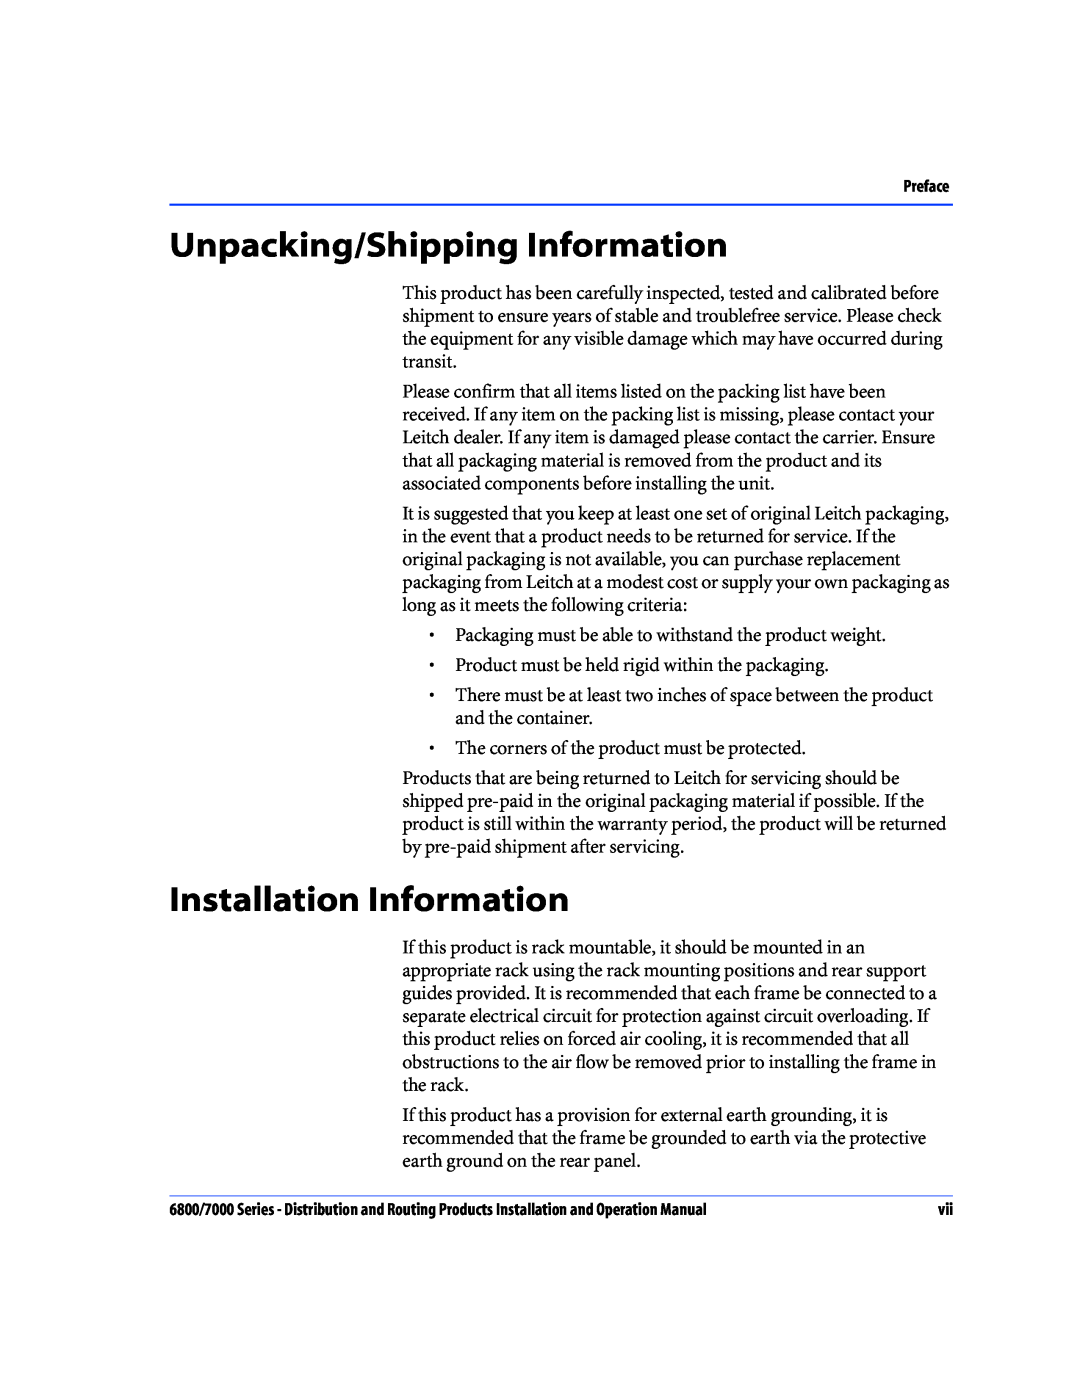 Nokia 6800 Series, 7000 Series operation manual Unpacking/Shipping Information, Installation Information 